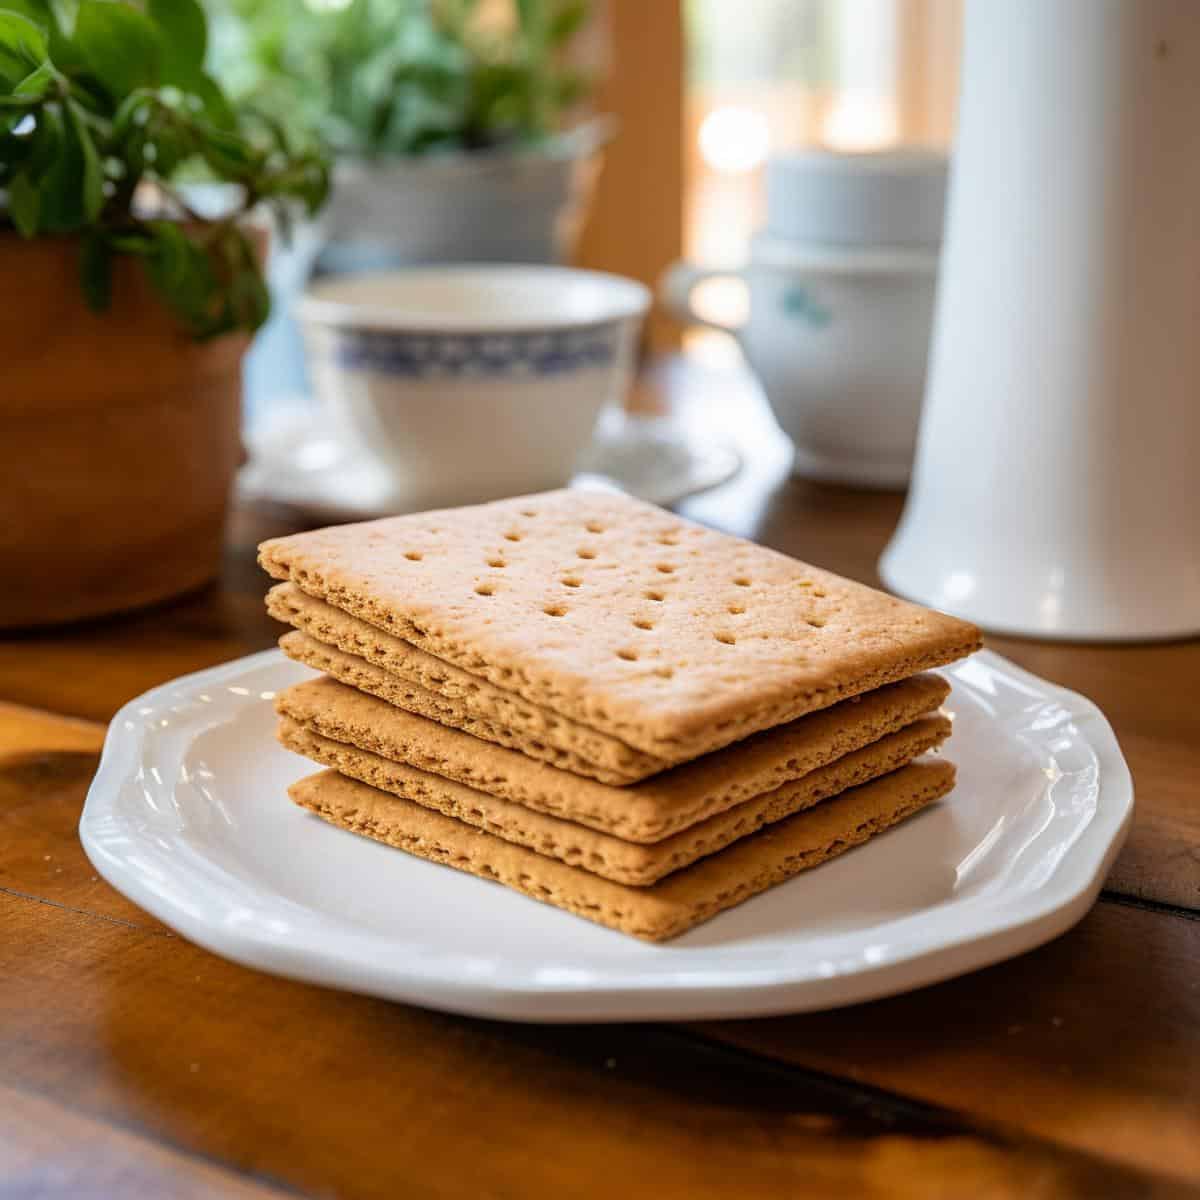 Cracker on a kitchen counter